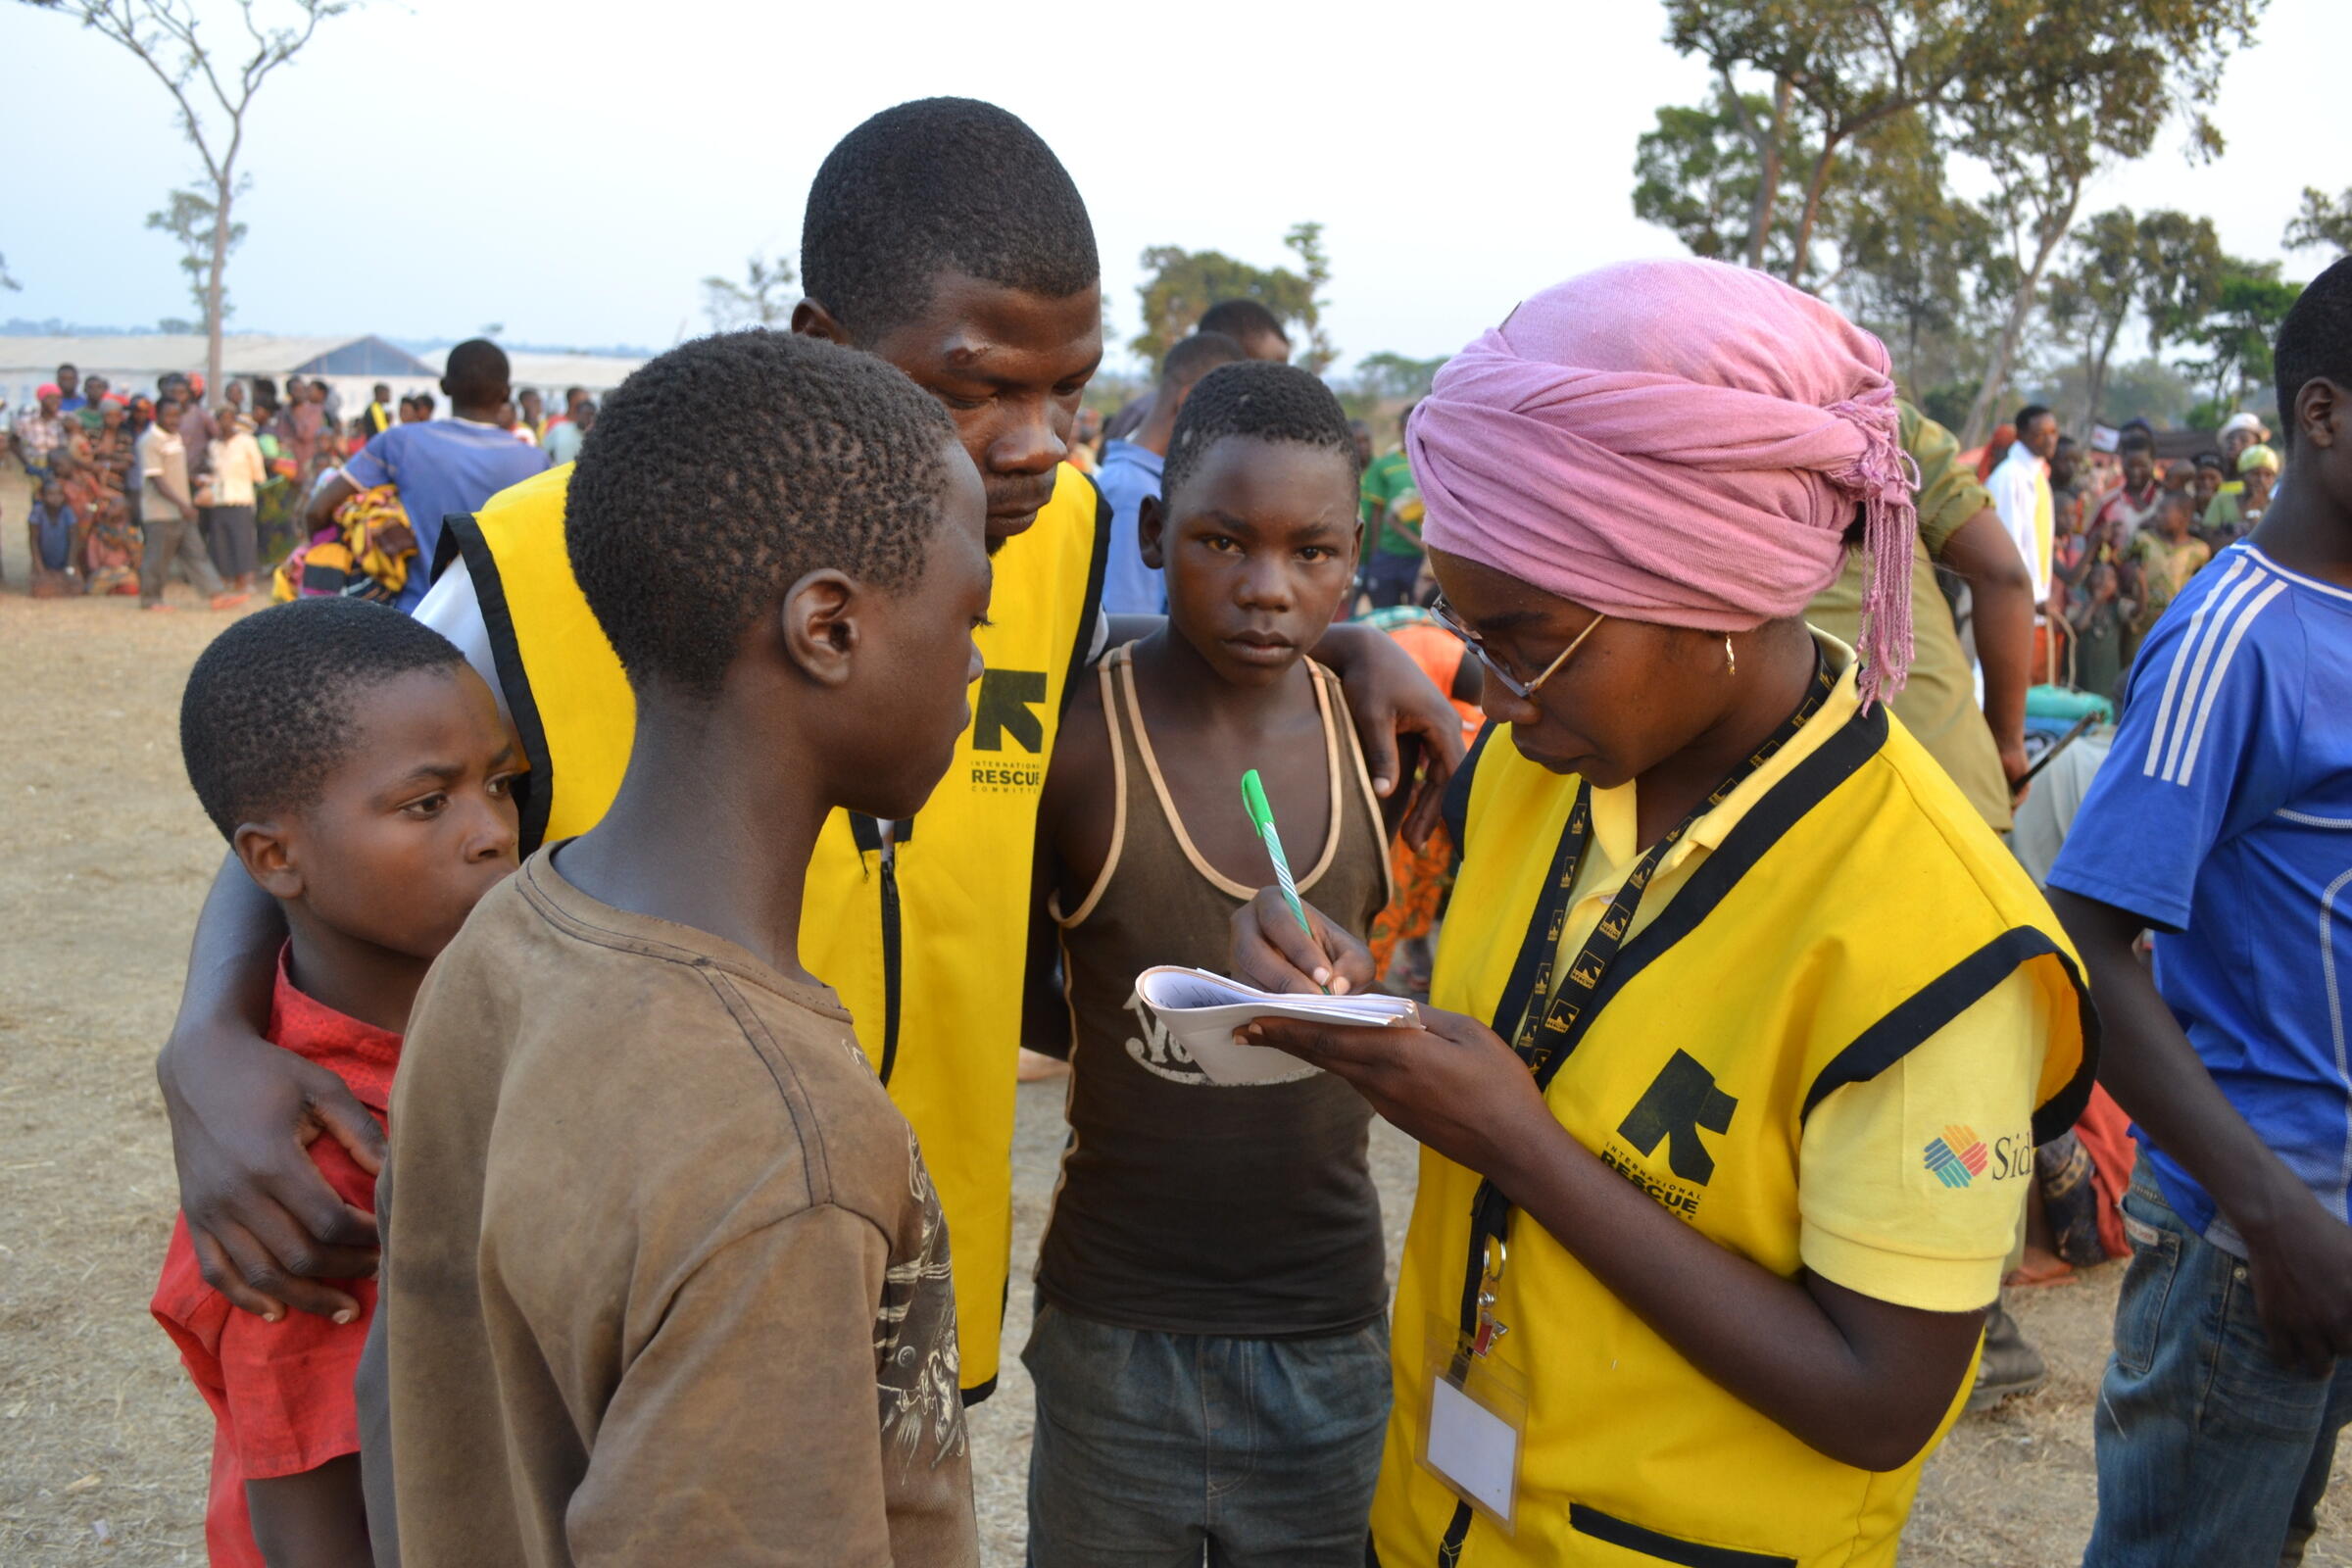 International Rescue Committee staff are working to reunite families in Nyarugusu refugee camp, Tanzania.